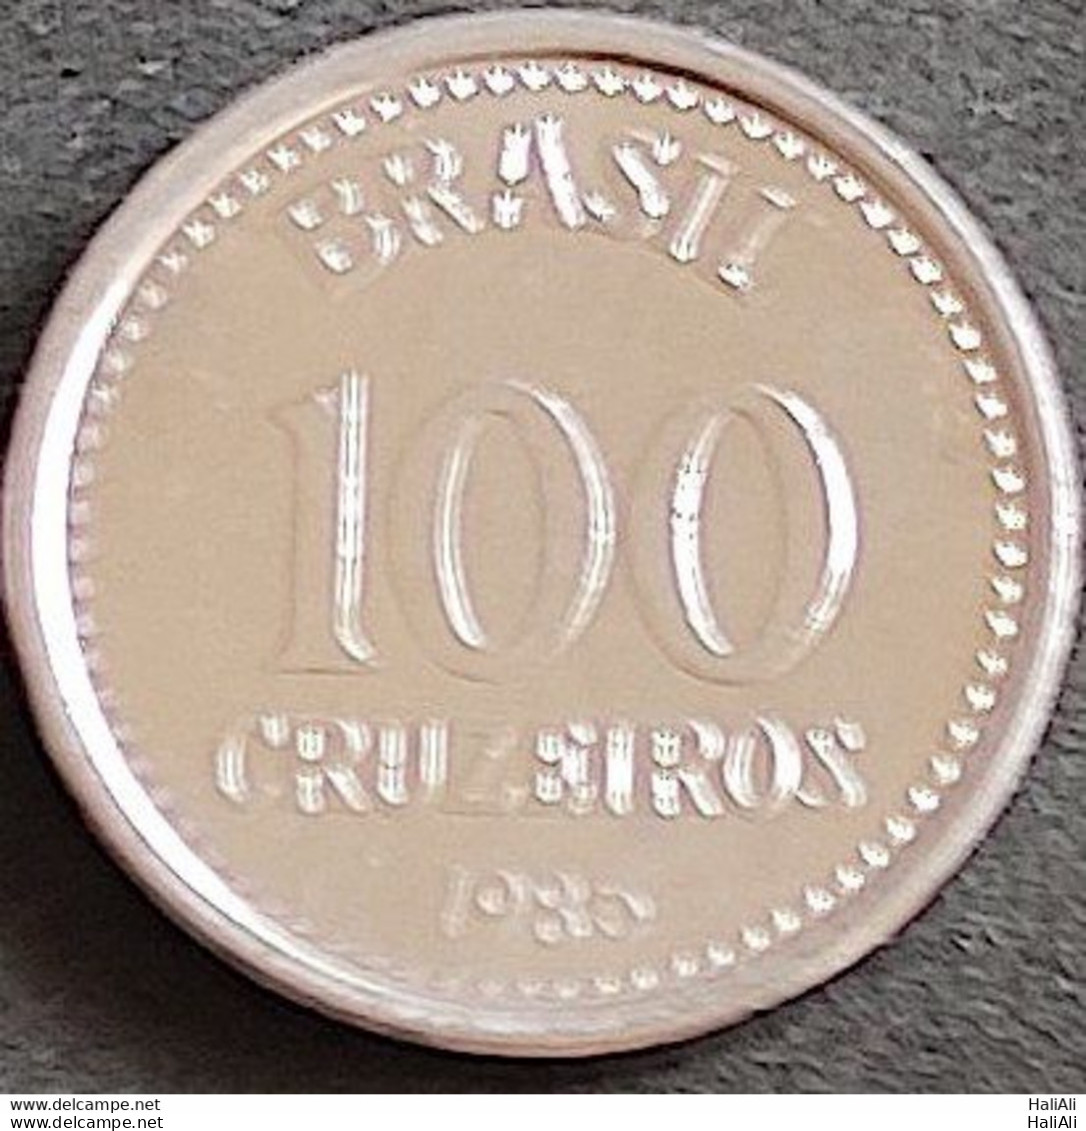 Coin Brazil Moeda Brasil 1985 100 Cruzeiros 1 - Brazil